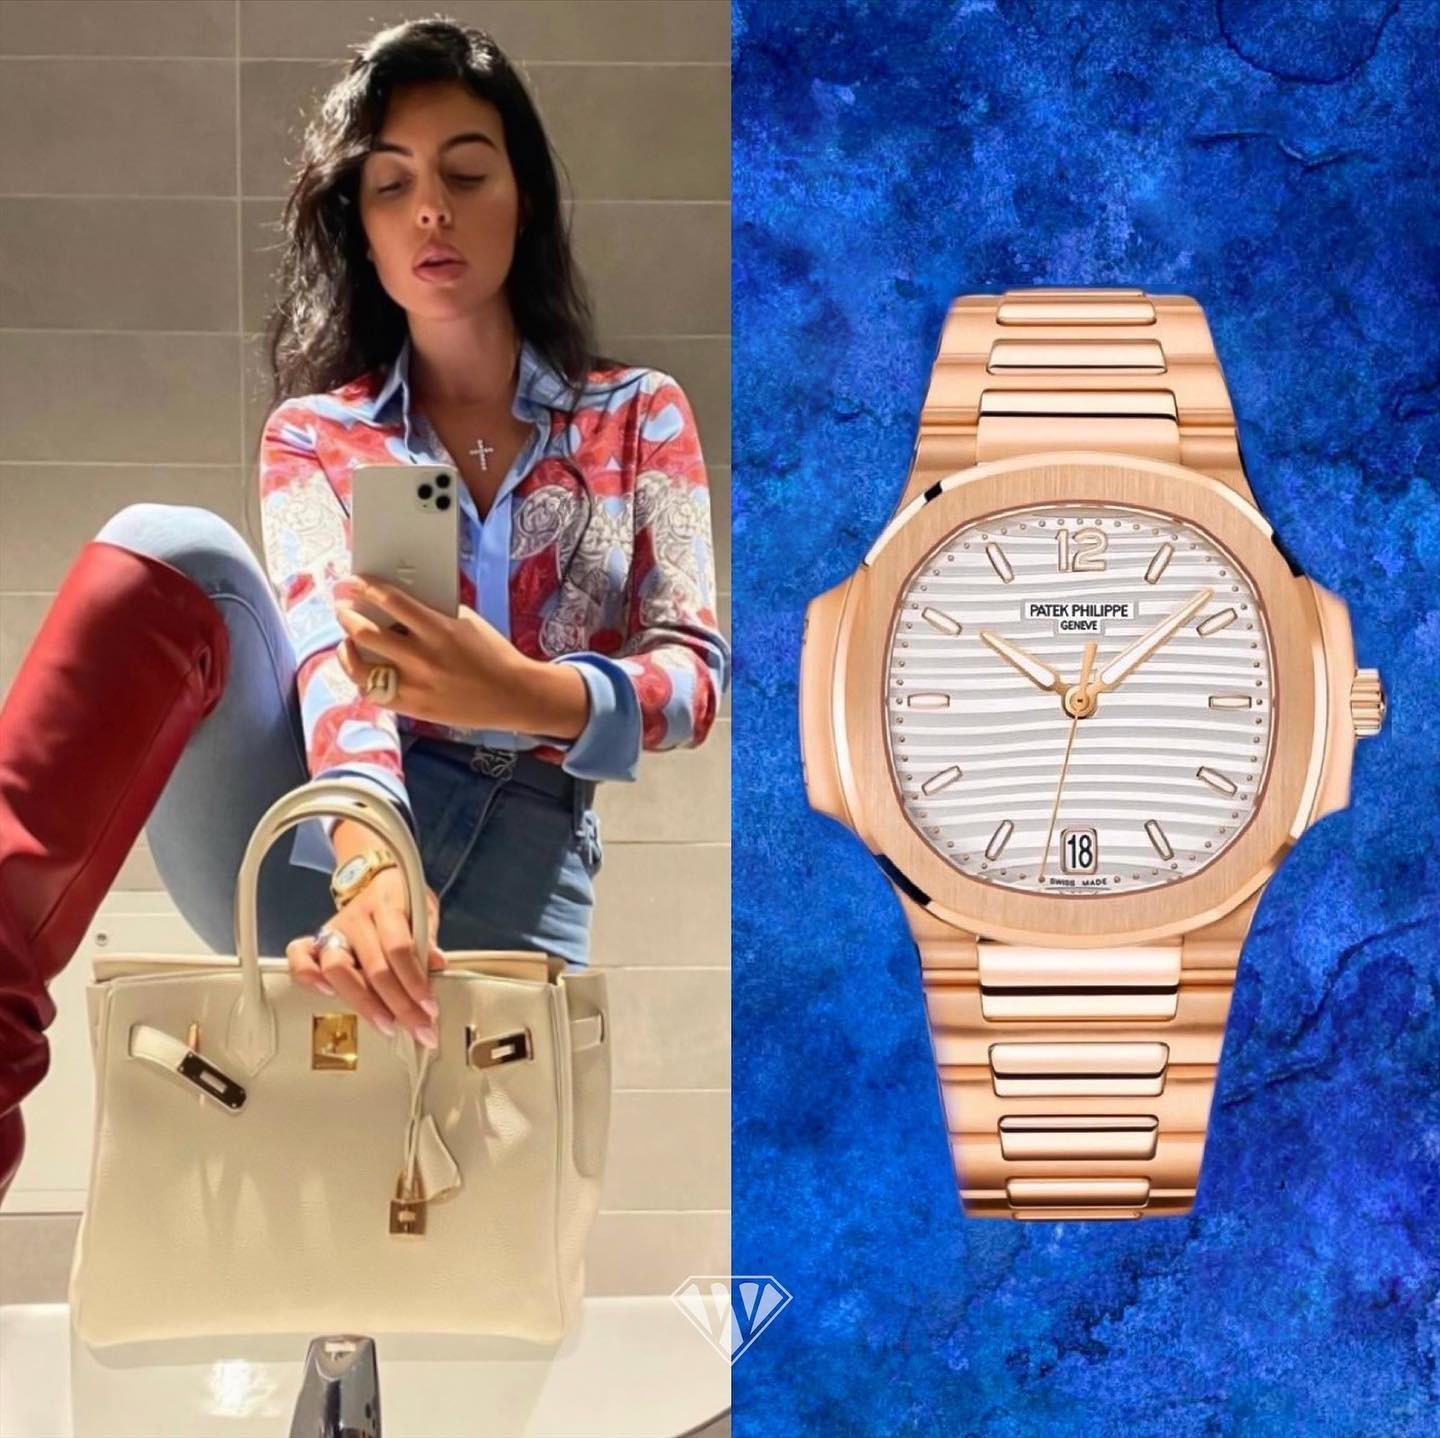 Cristiano Ronaldo goes handbag shopping for girlfriend Georgina